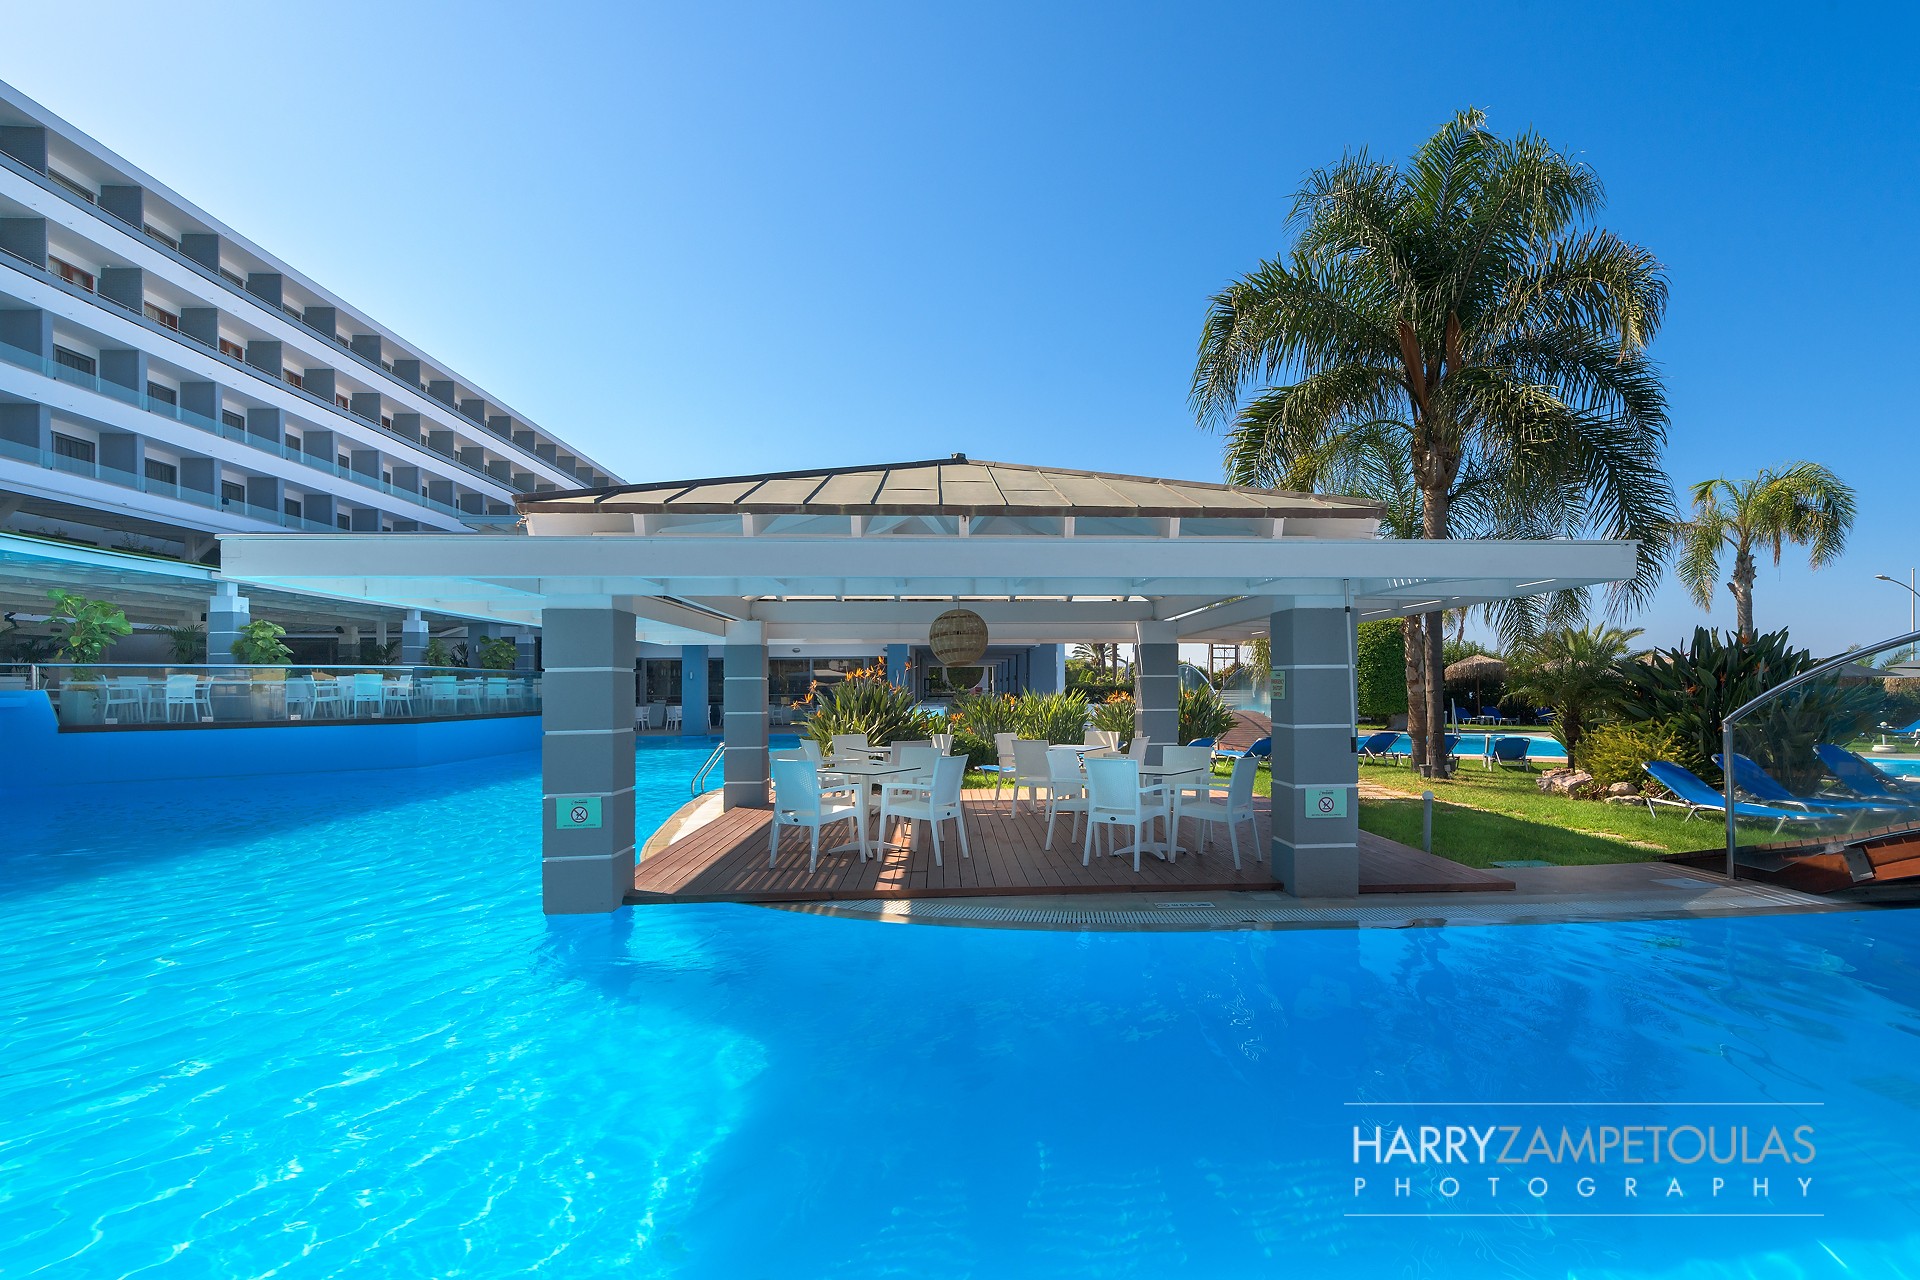 Oceanis-Hotel-Rhodes-Harry-Zampetoulas-Photography-22 Oceanis Hotel Rhodes - Hotel Photography 